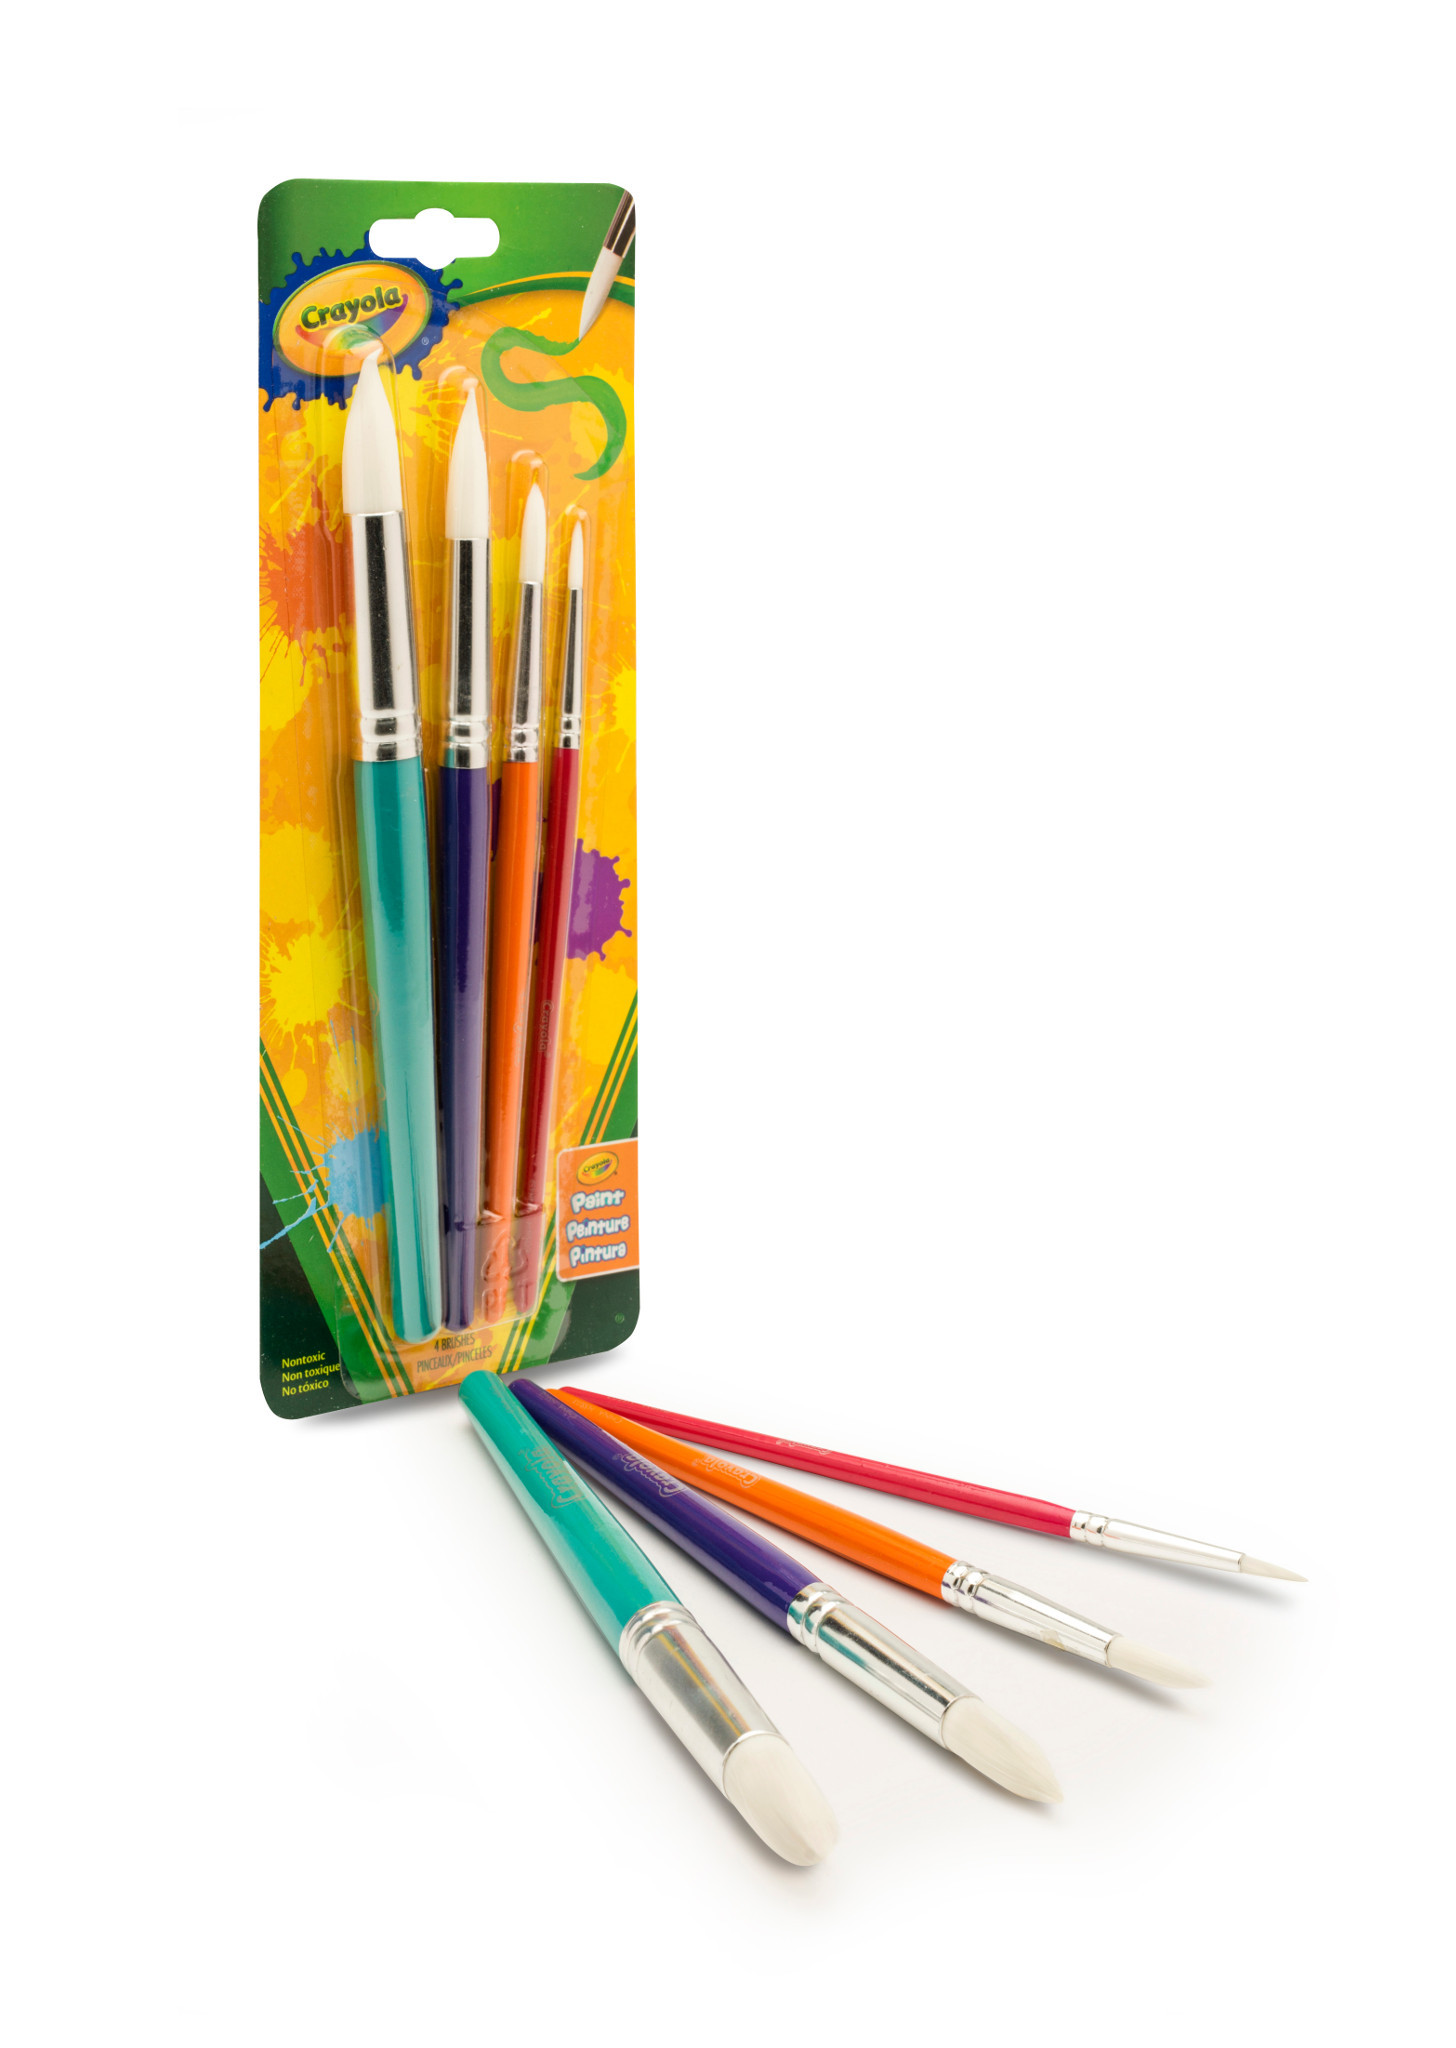 Crayola Round Soft Bristle Paint Brush Set, Multi Sizes, 4 Ct, School Supplies, Kids Paint Supplies - image 4 of 6